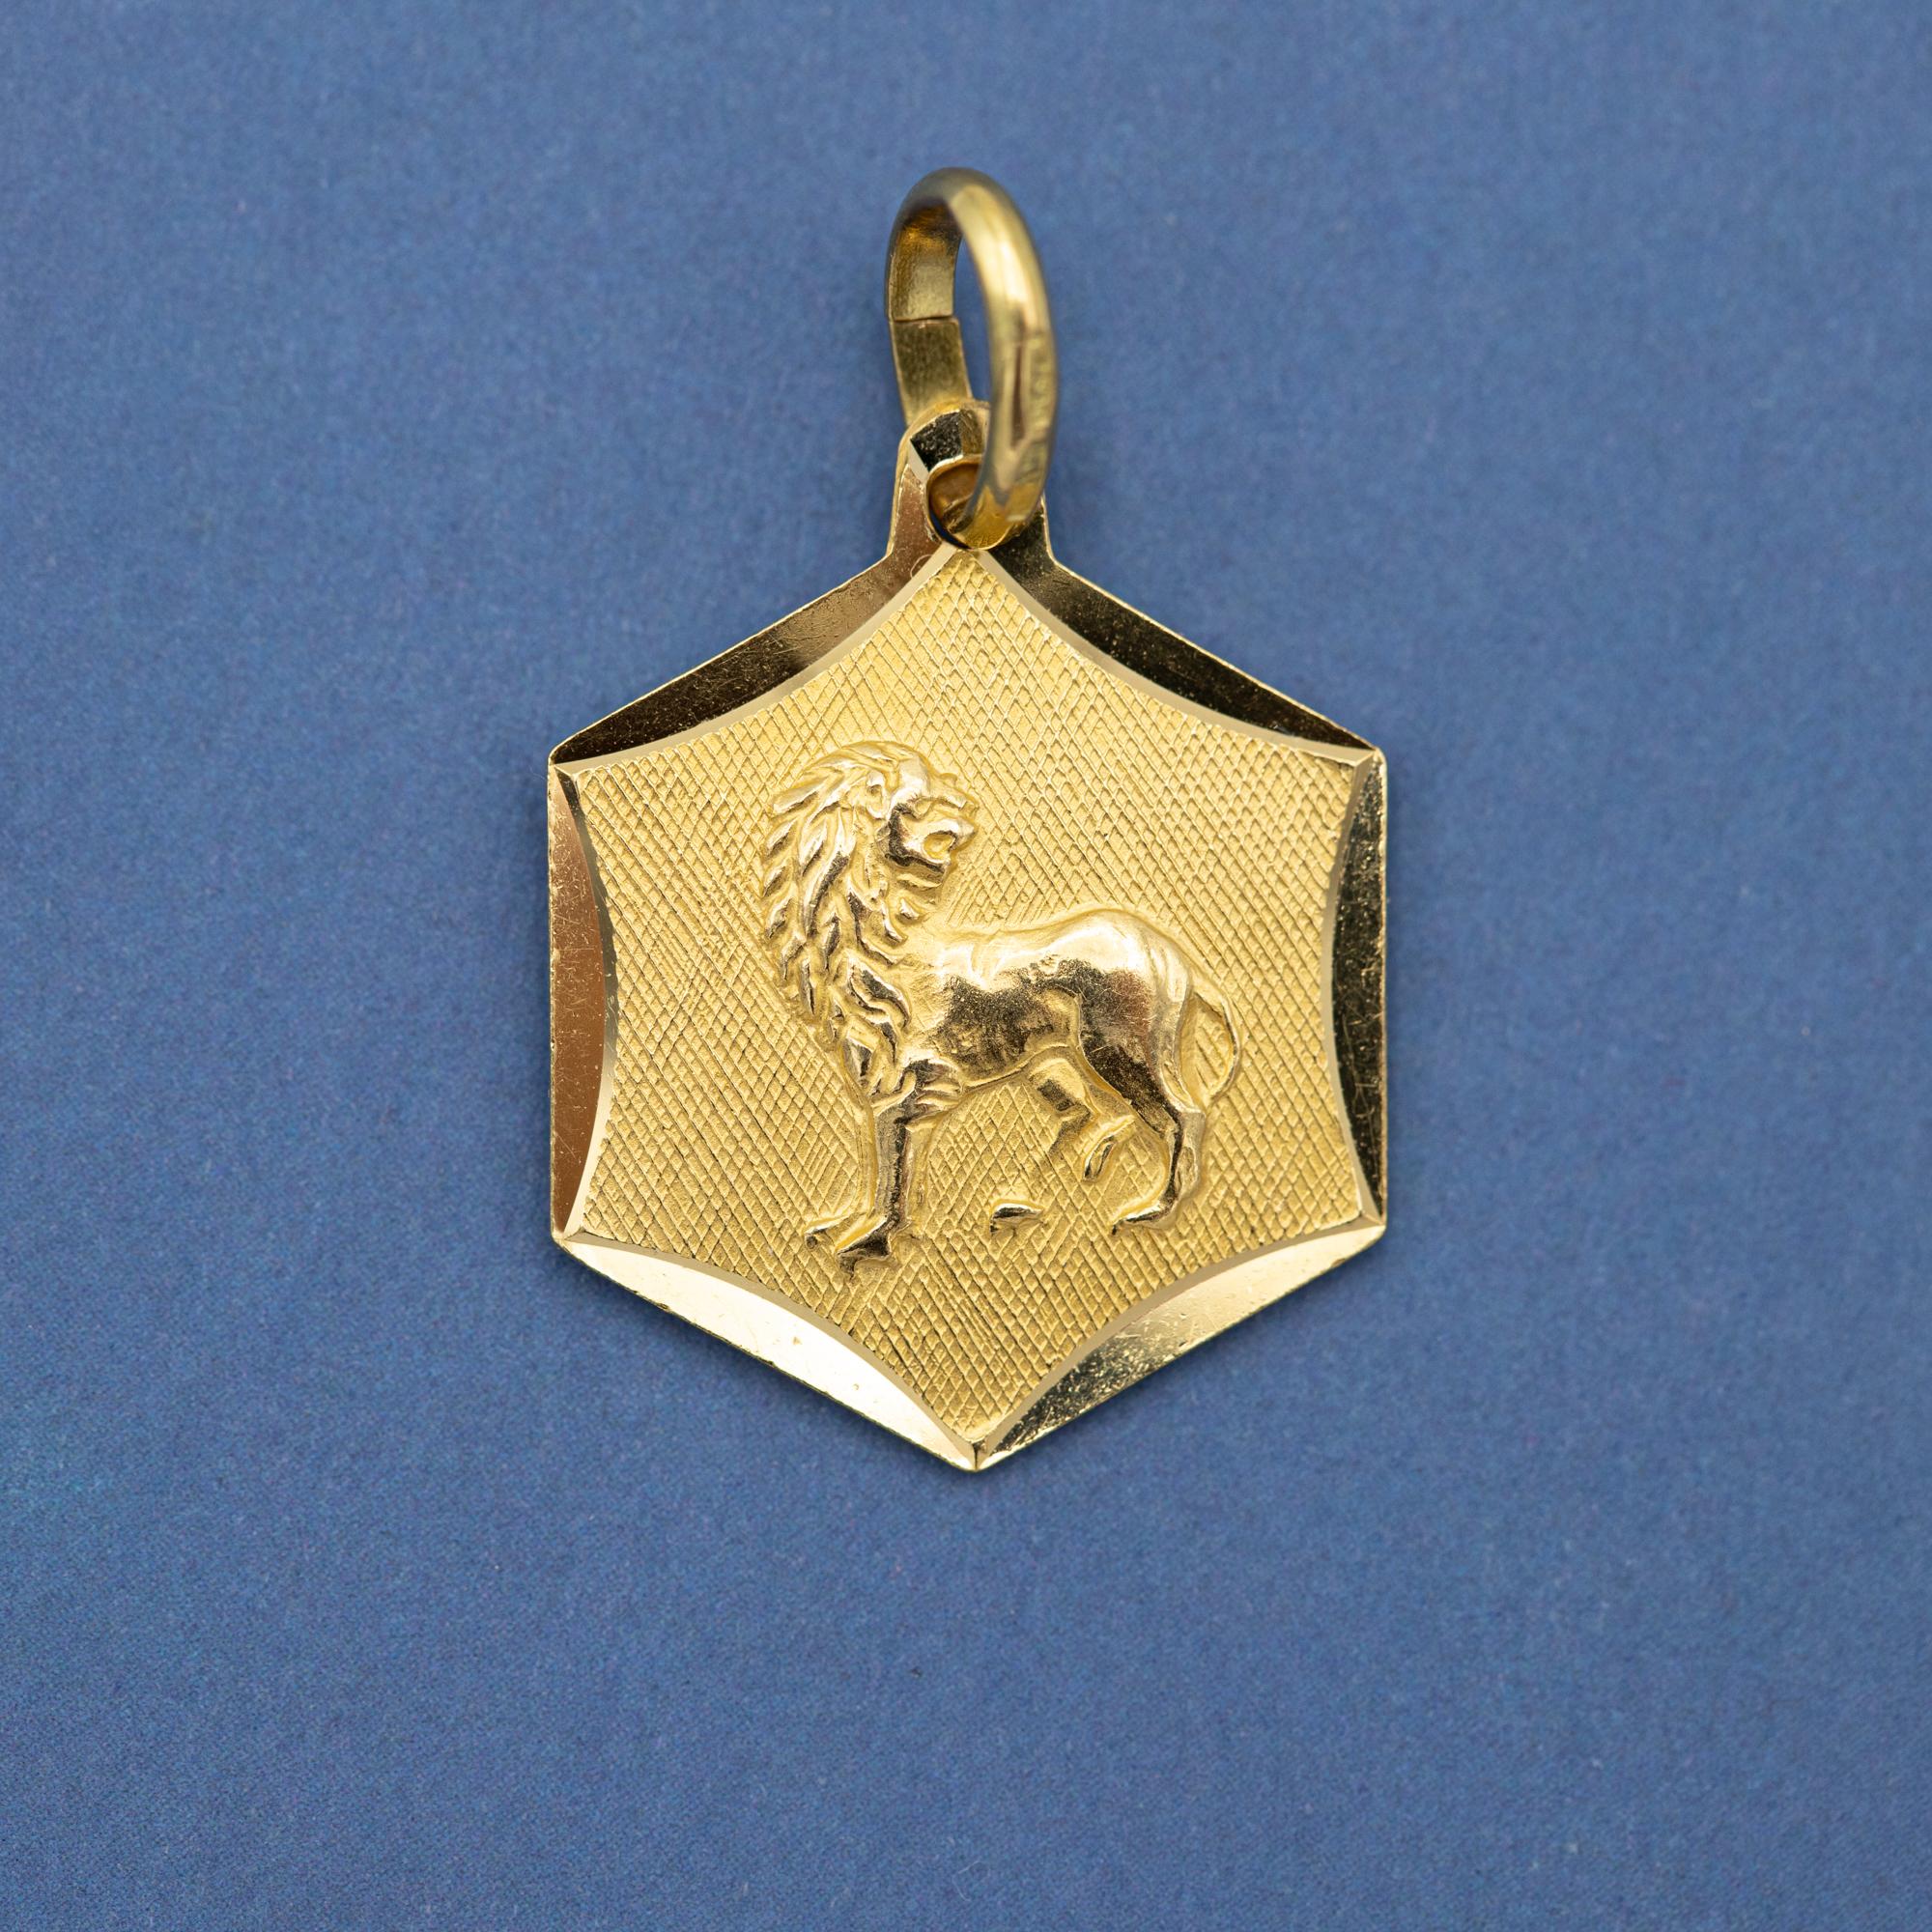 Vintage 18 k Italian zodiac charm pendant - Leo charm - solid yellow gold 2